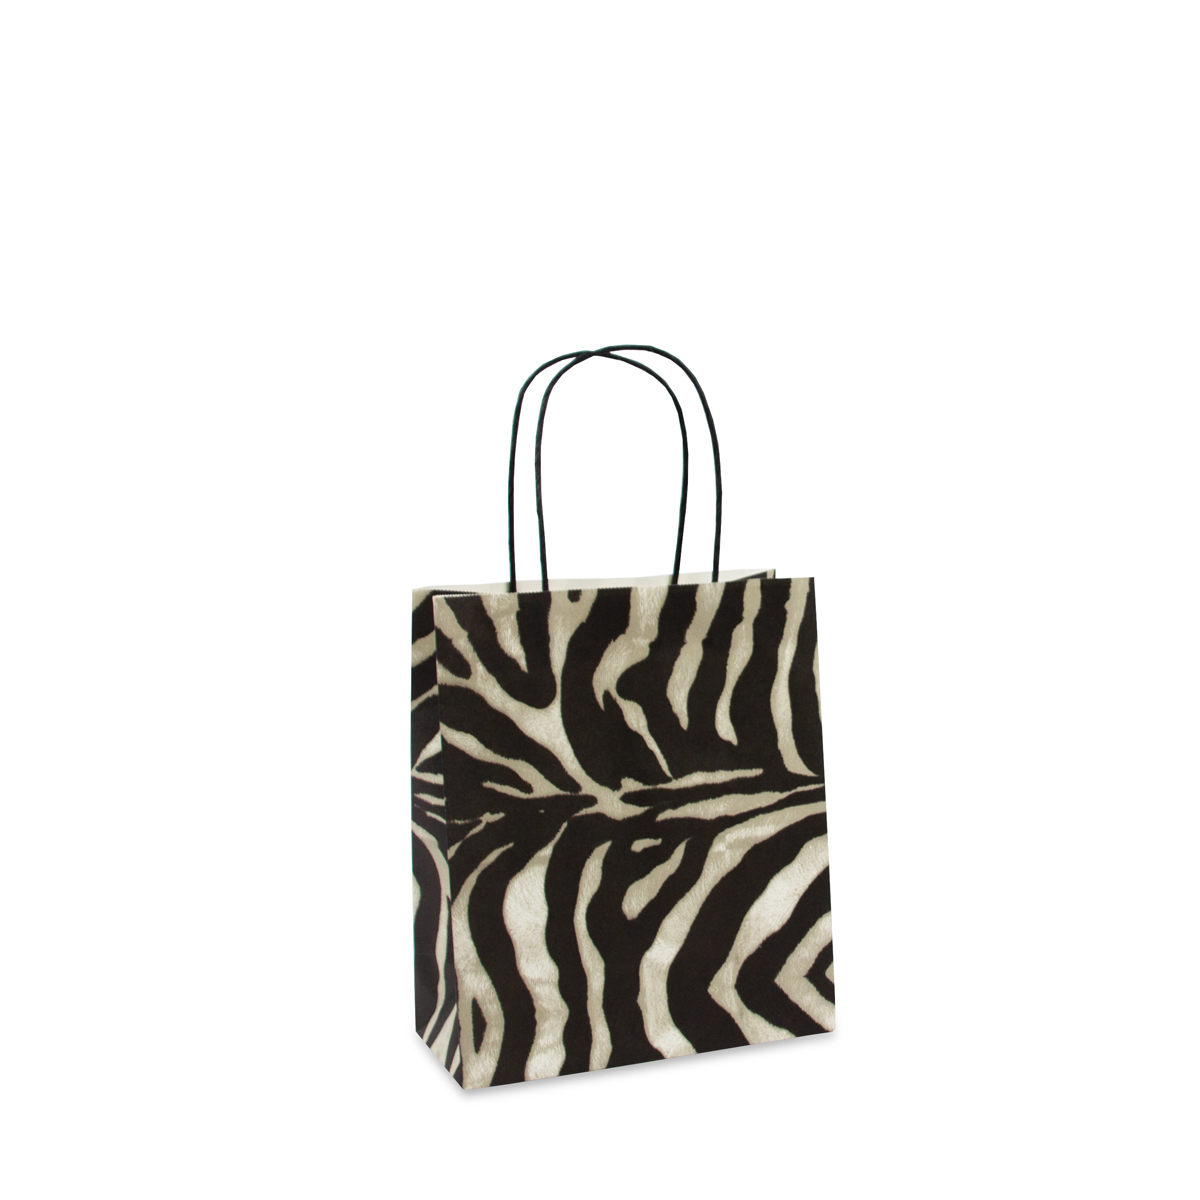 Twisted paper bags - Zebra print 